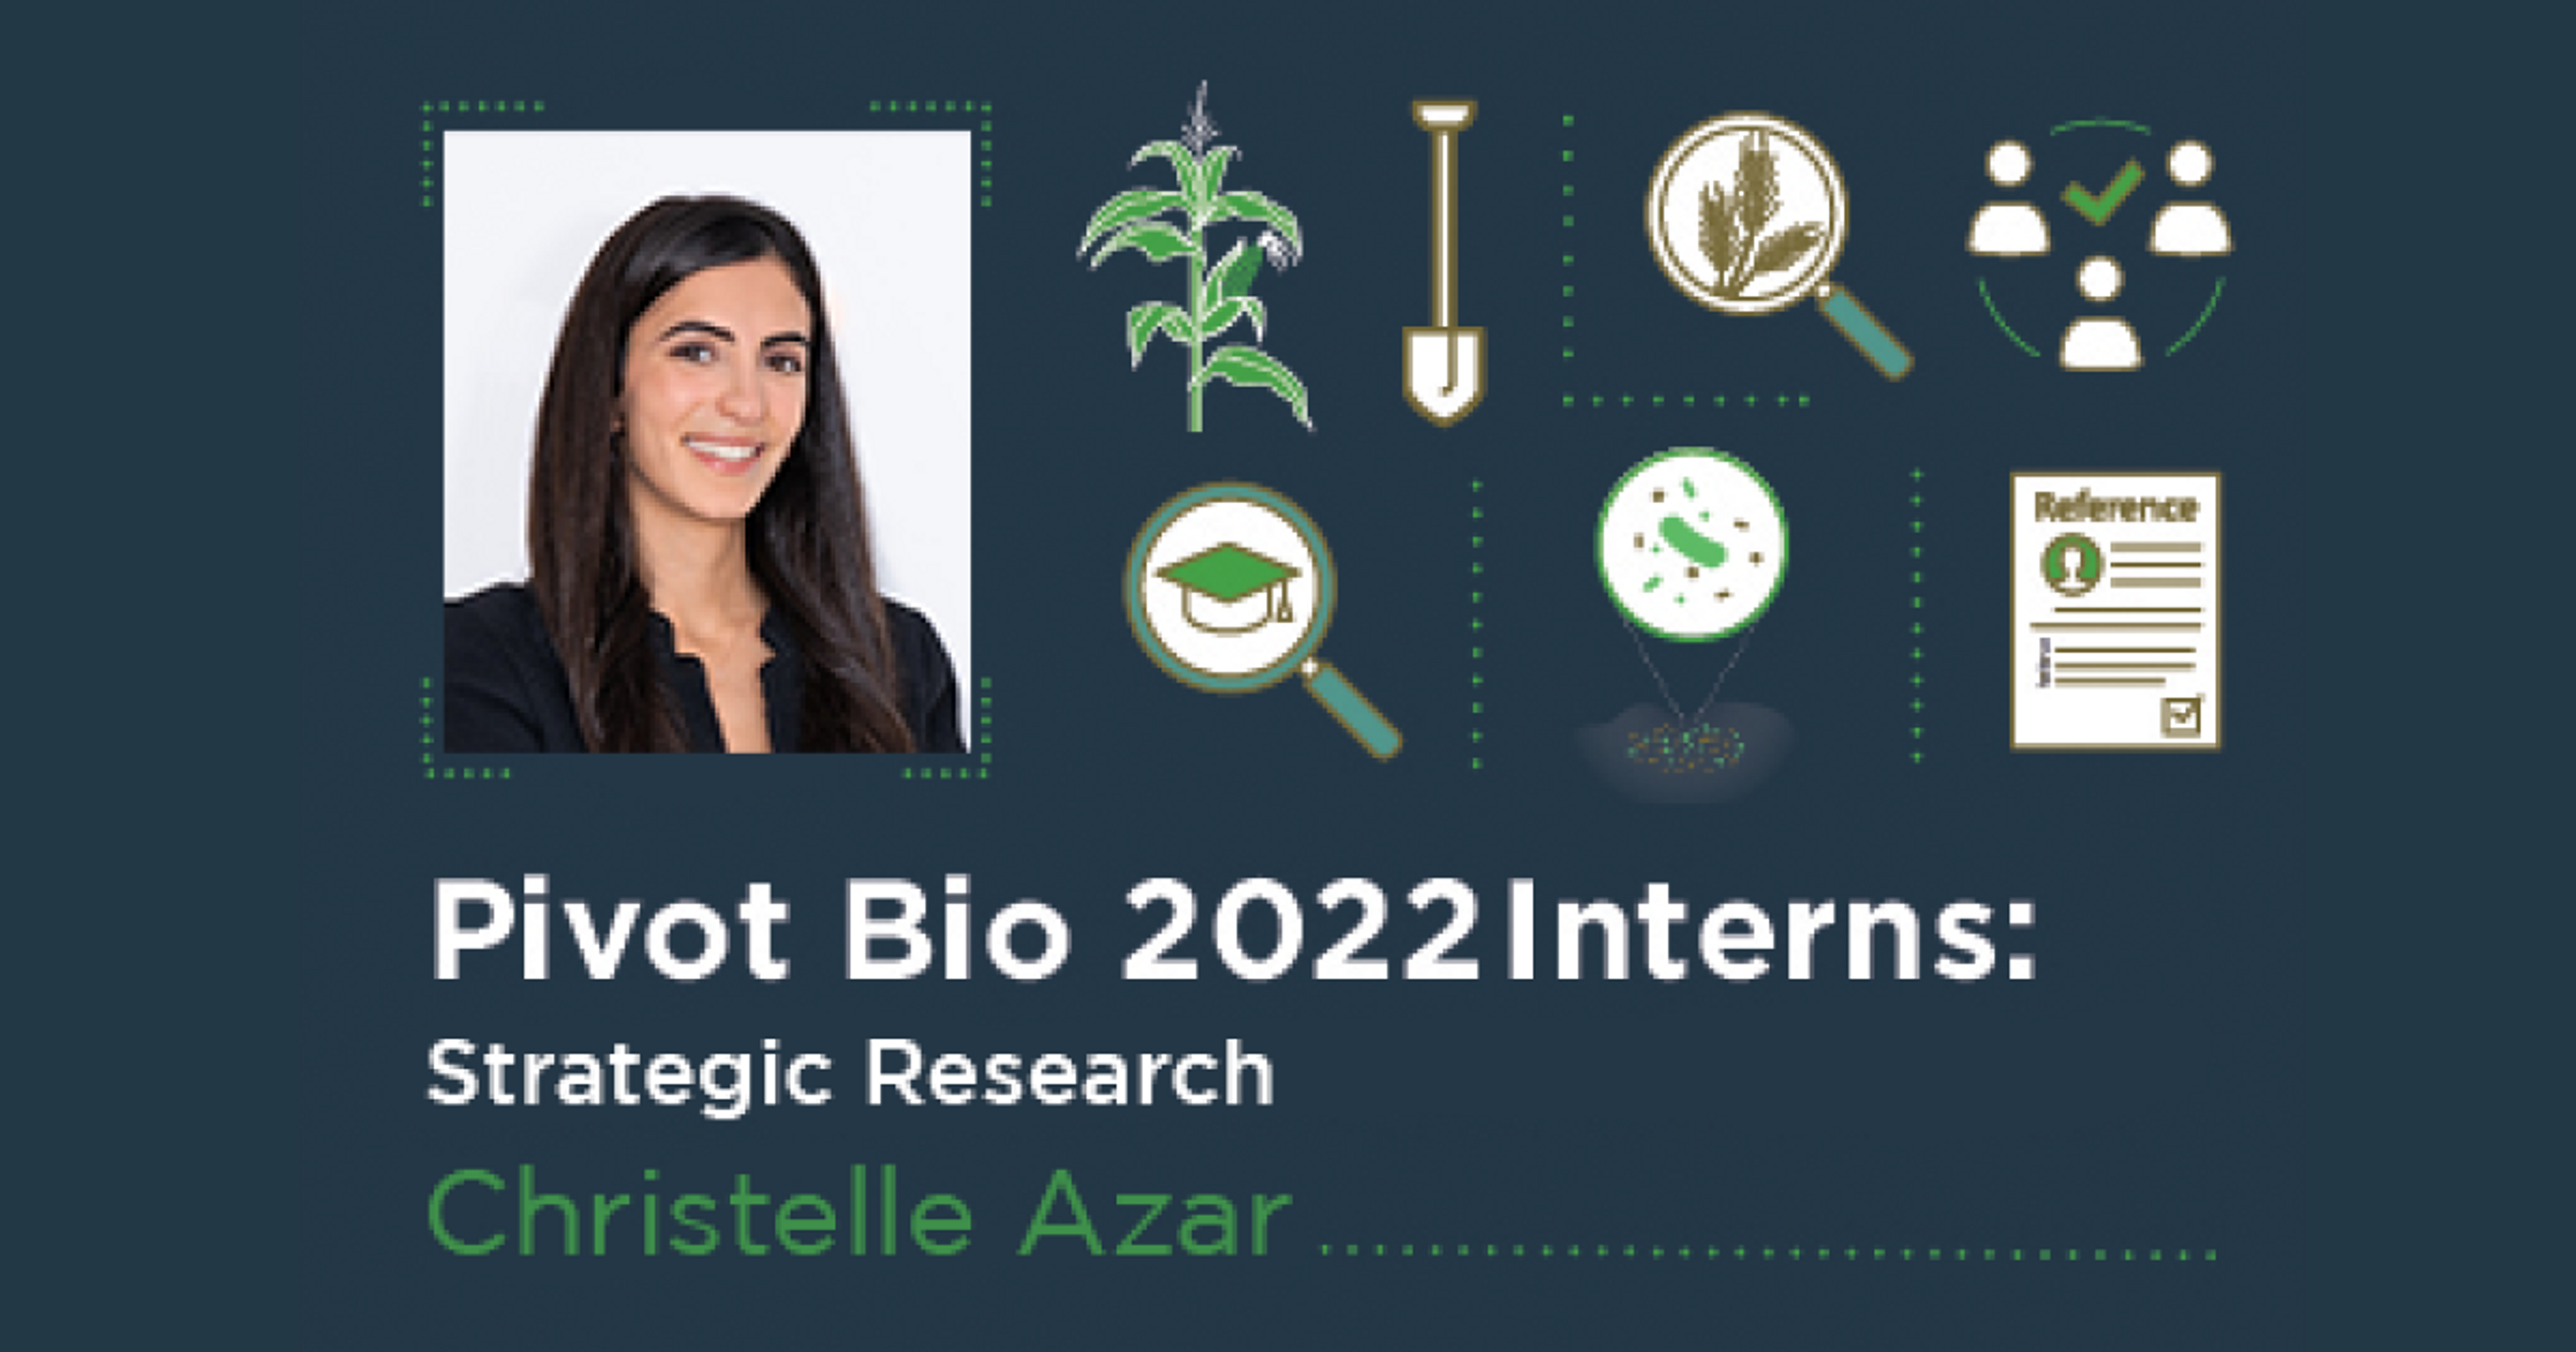 Pivot Bio 2022 Interns: Strategic Research